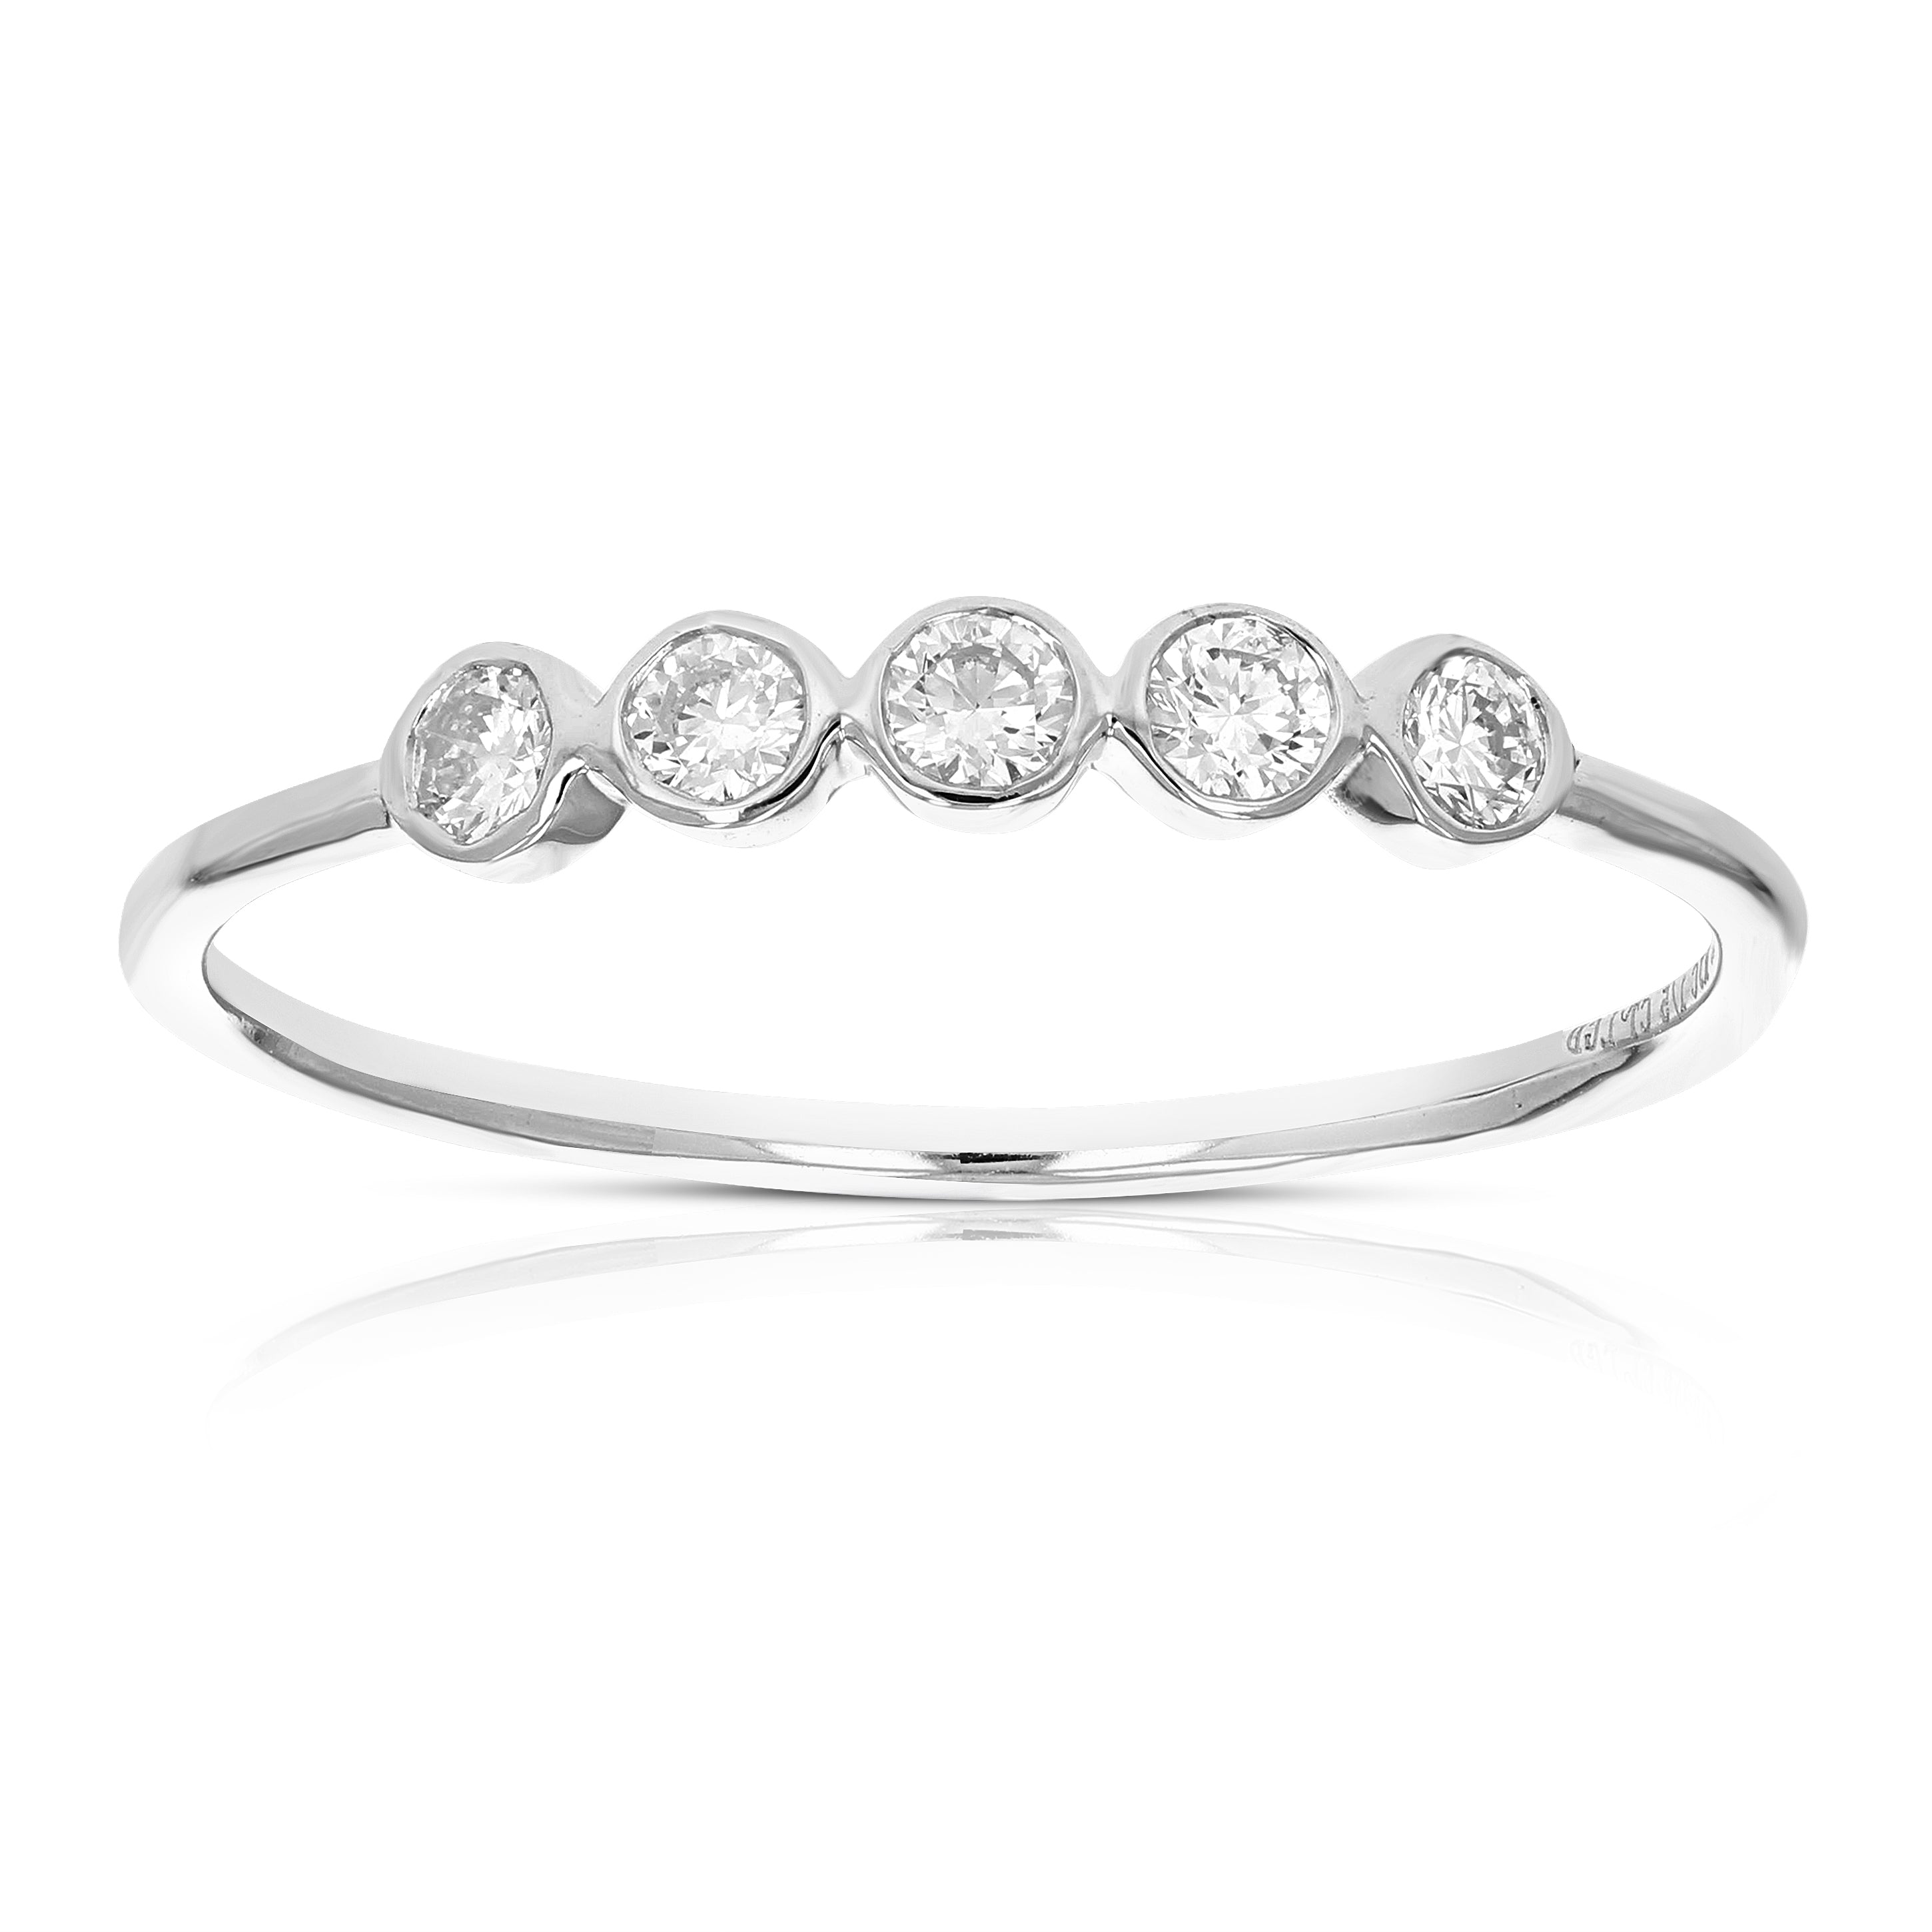 Five Floating Diamond Ring